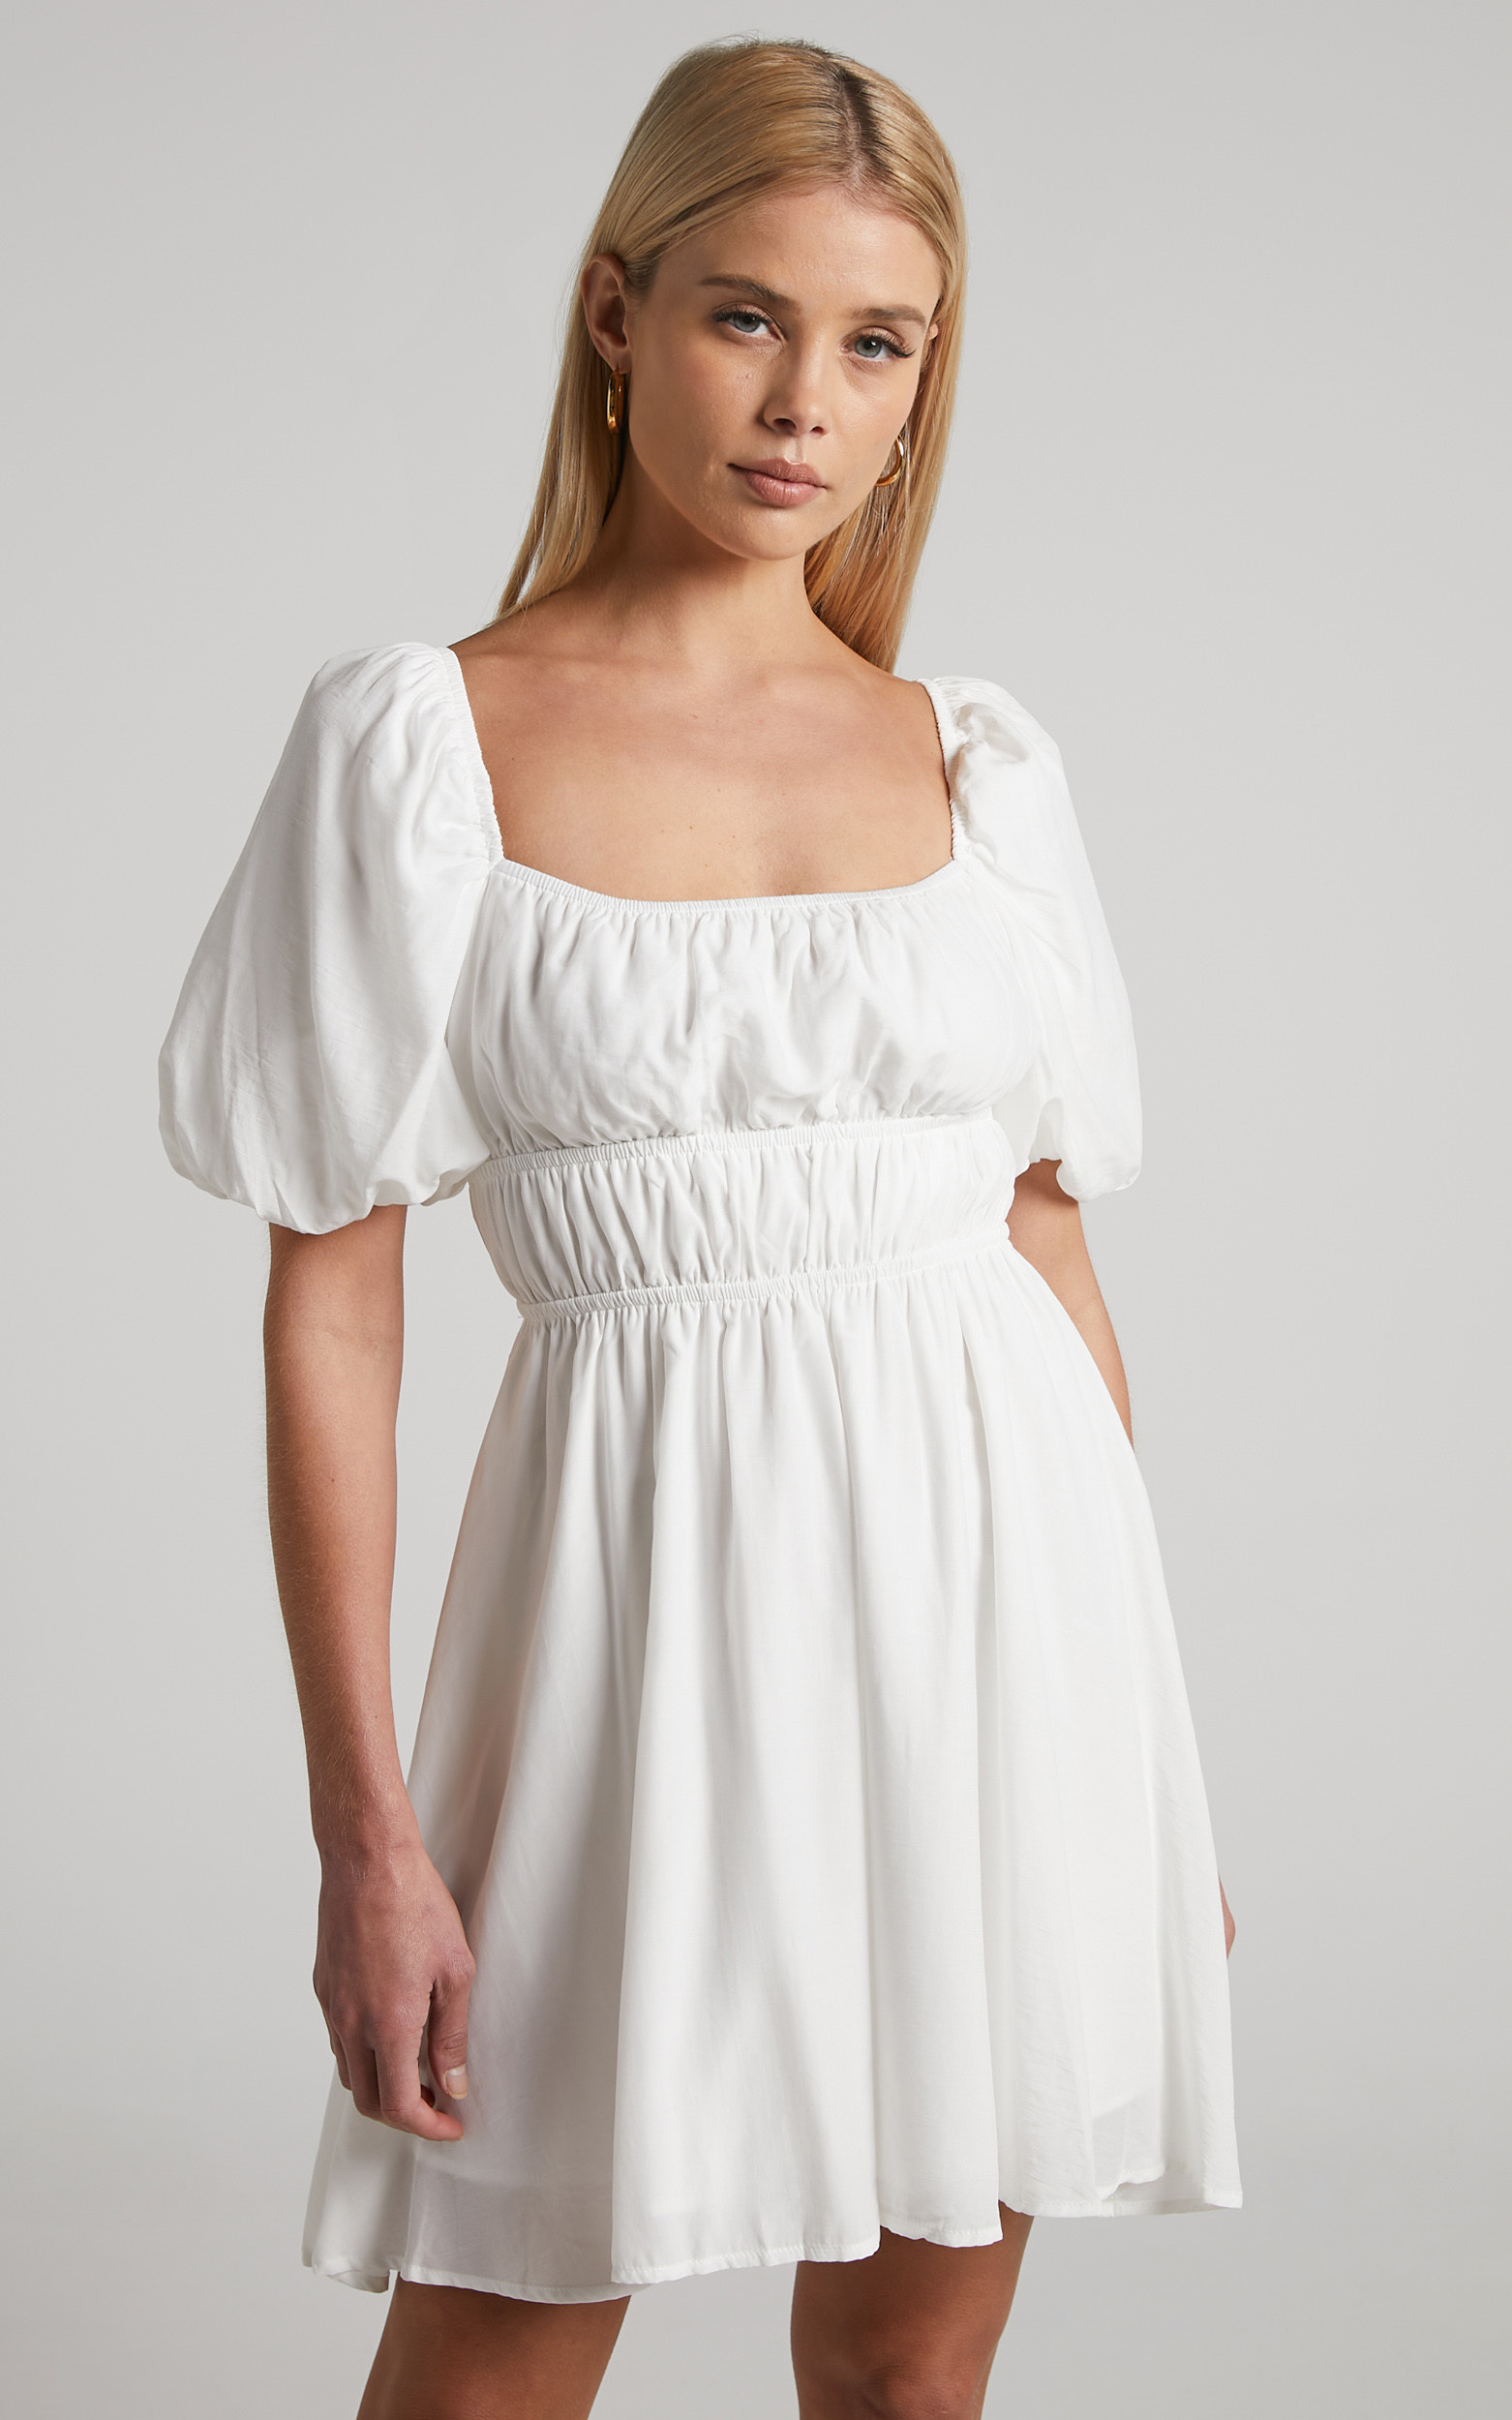 Maretta Stretch Waist Square Neck Mini Dress in White - 04, WHT1, hi-res image number null